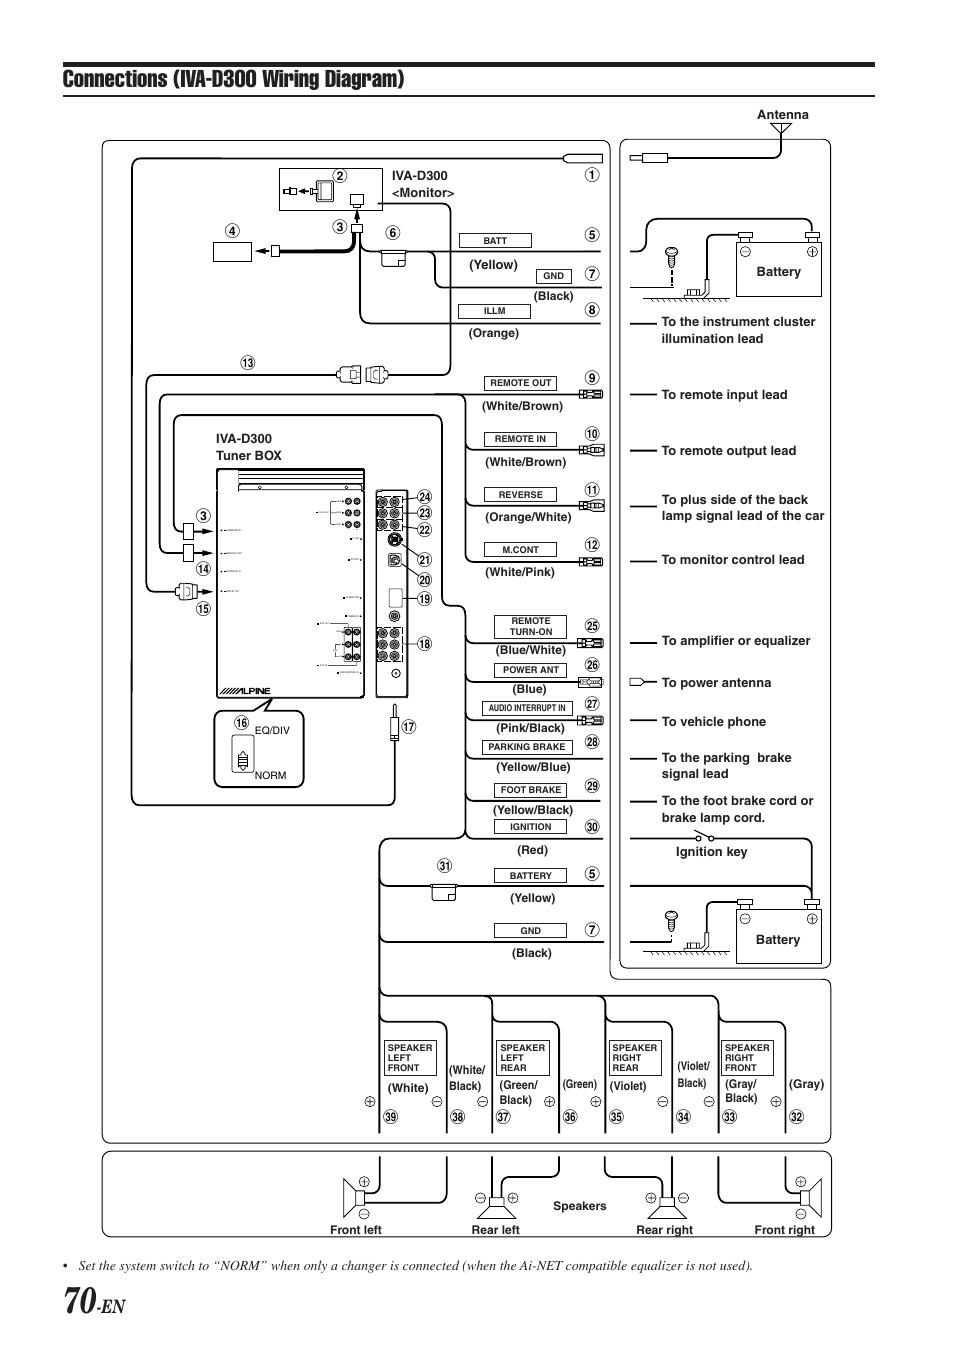 Connections (iva-d300 wiring diagram) | Alpine IVA-D300 ... jaguar x type central locking wiring diagram 